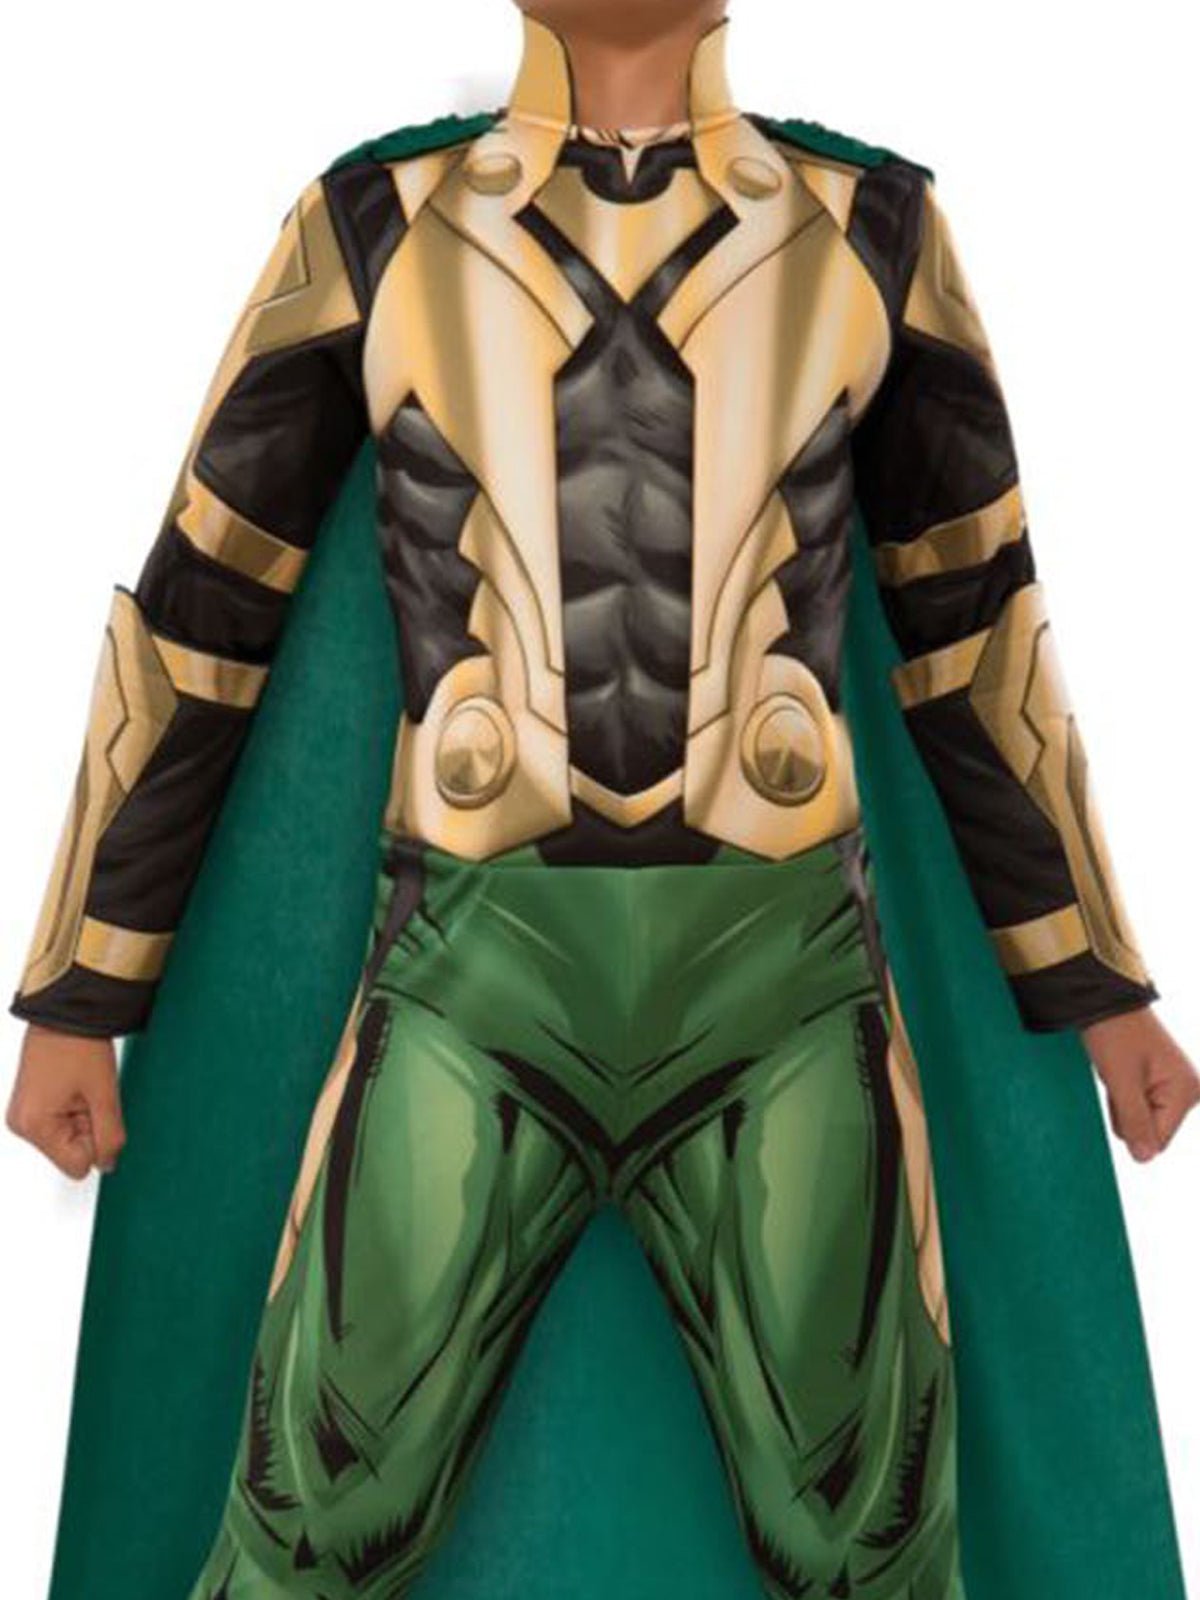 Transform into Loki with kids Marvel Costume